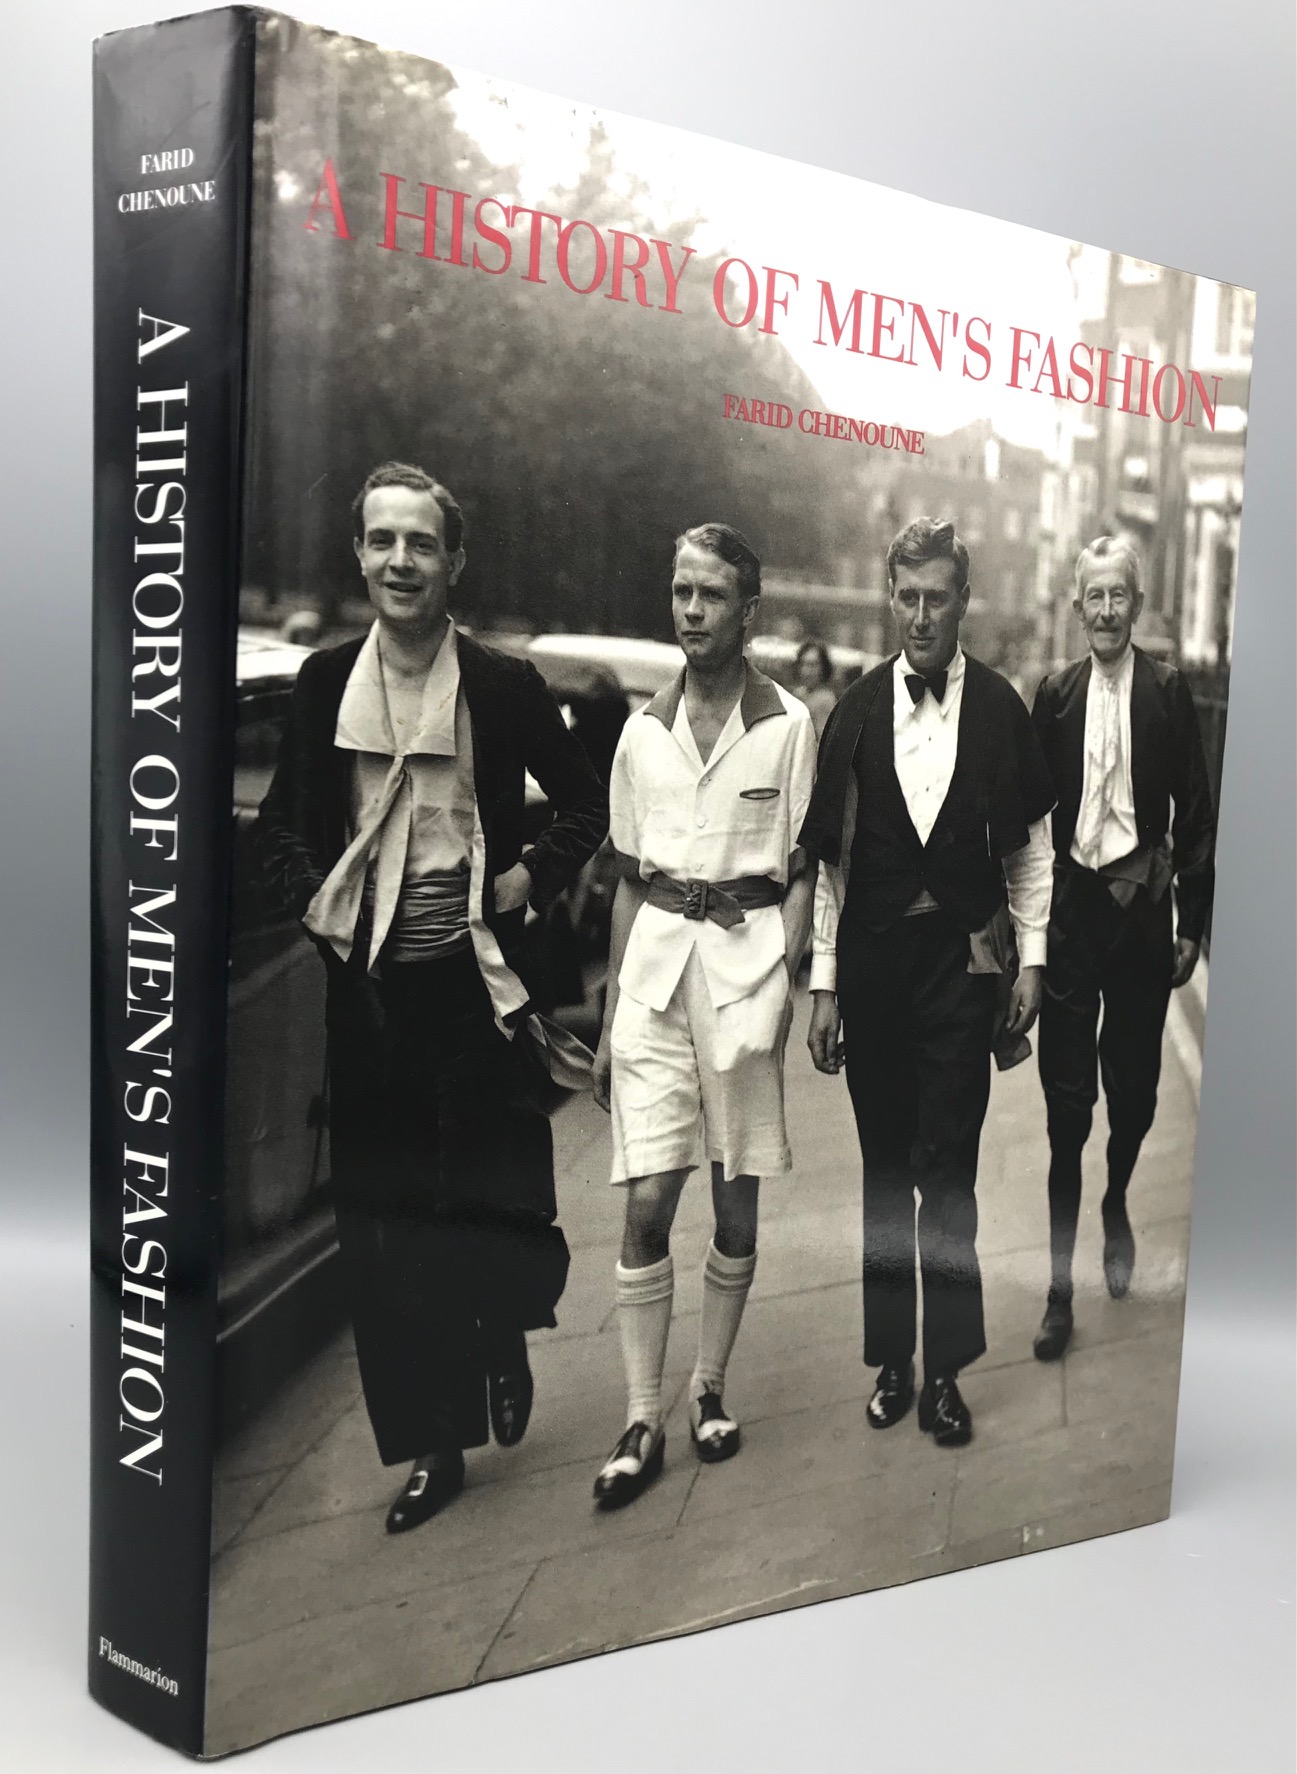 A HISTORY OF MEN'S FASHION, by Farid Chenoune - 1993 [DJ]